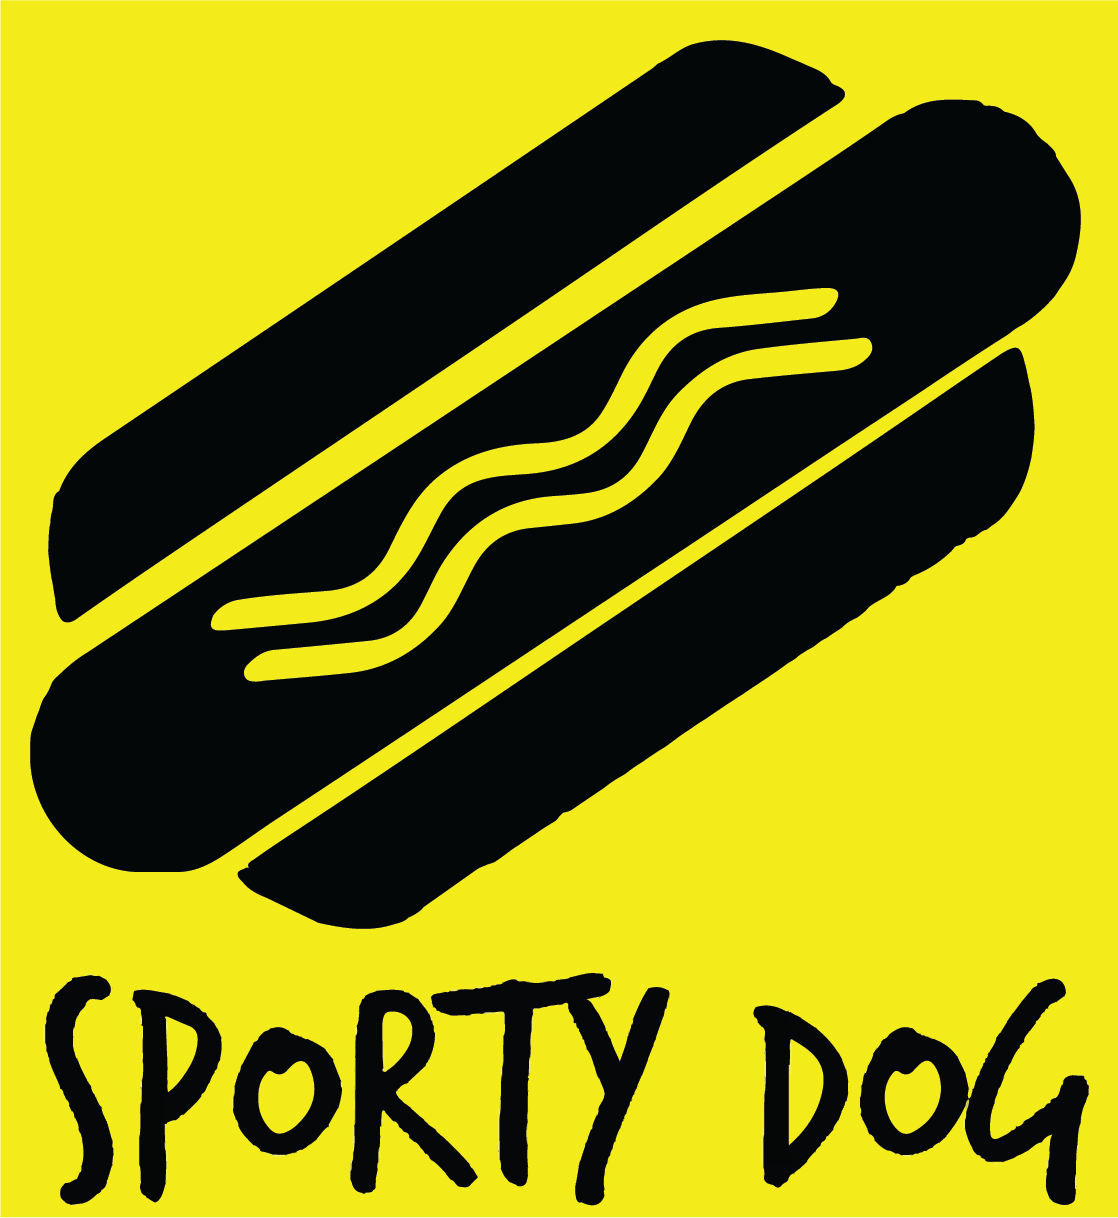 sporty_dog_logo